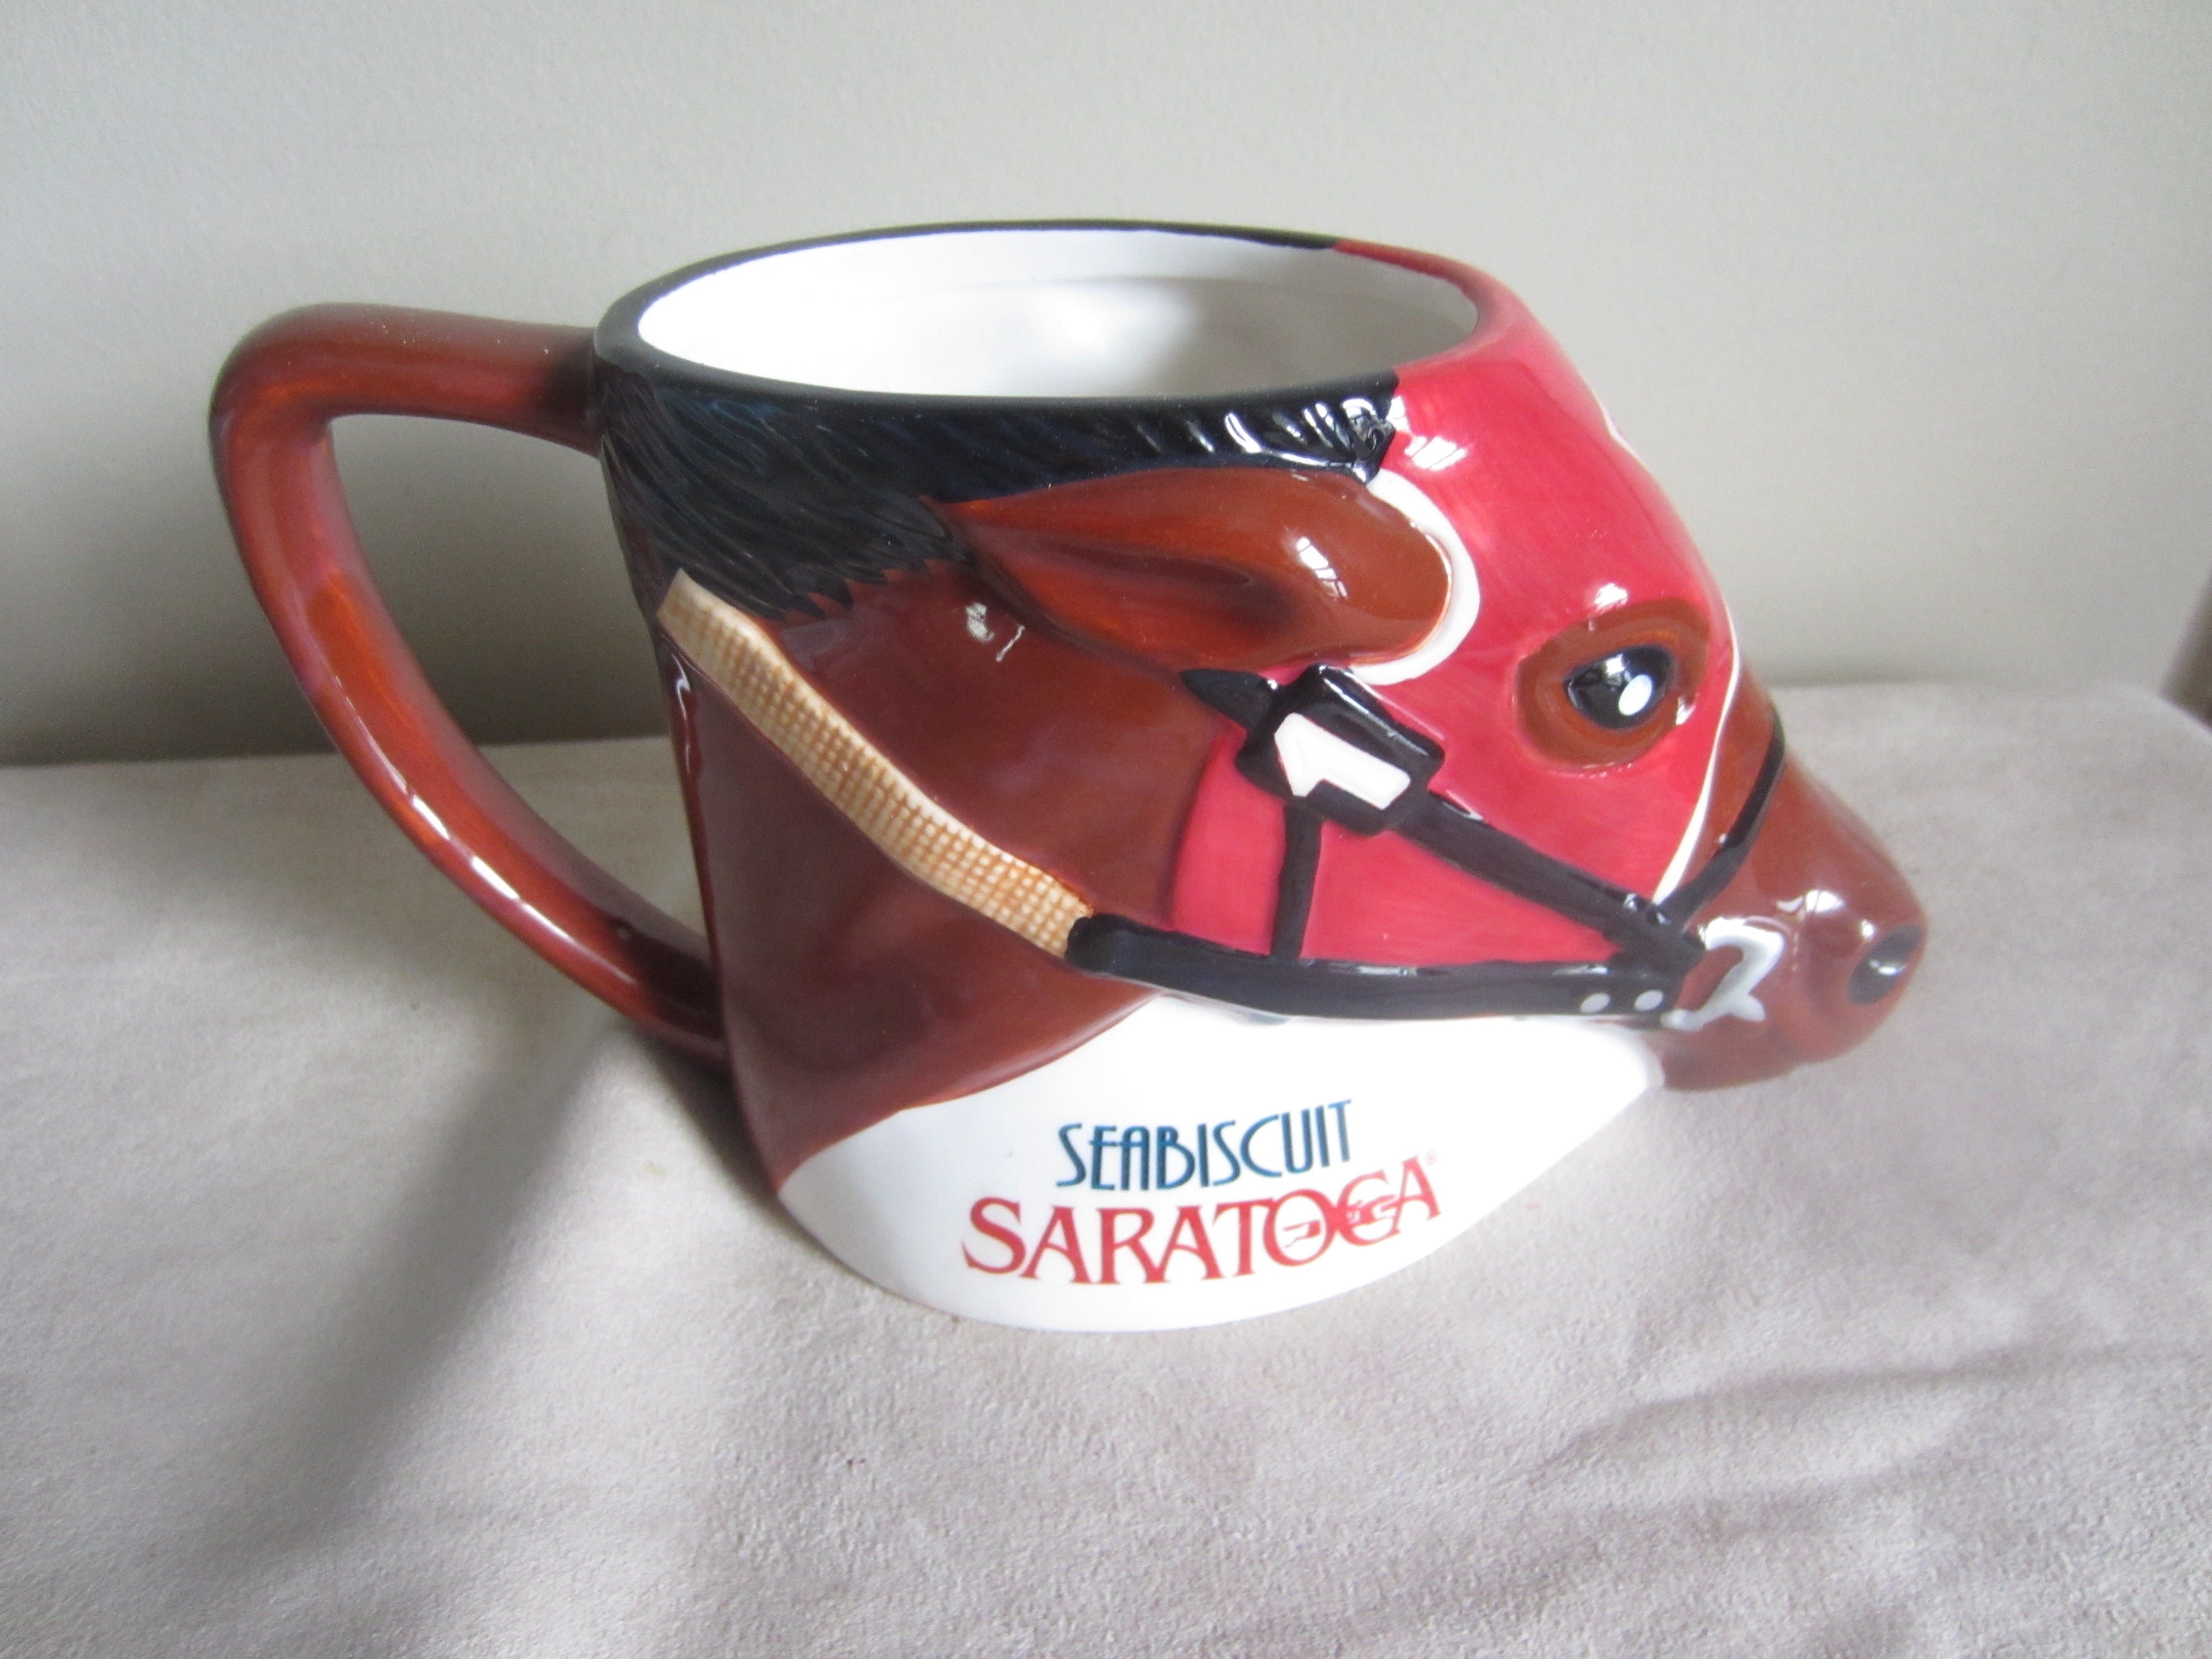 Saratoga Seabiscuit Ceramic Mug